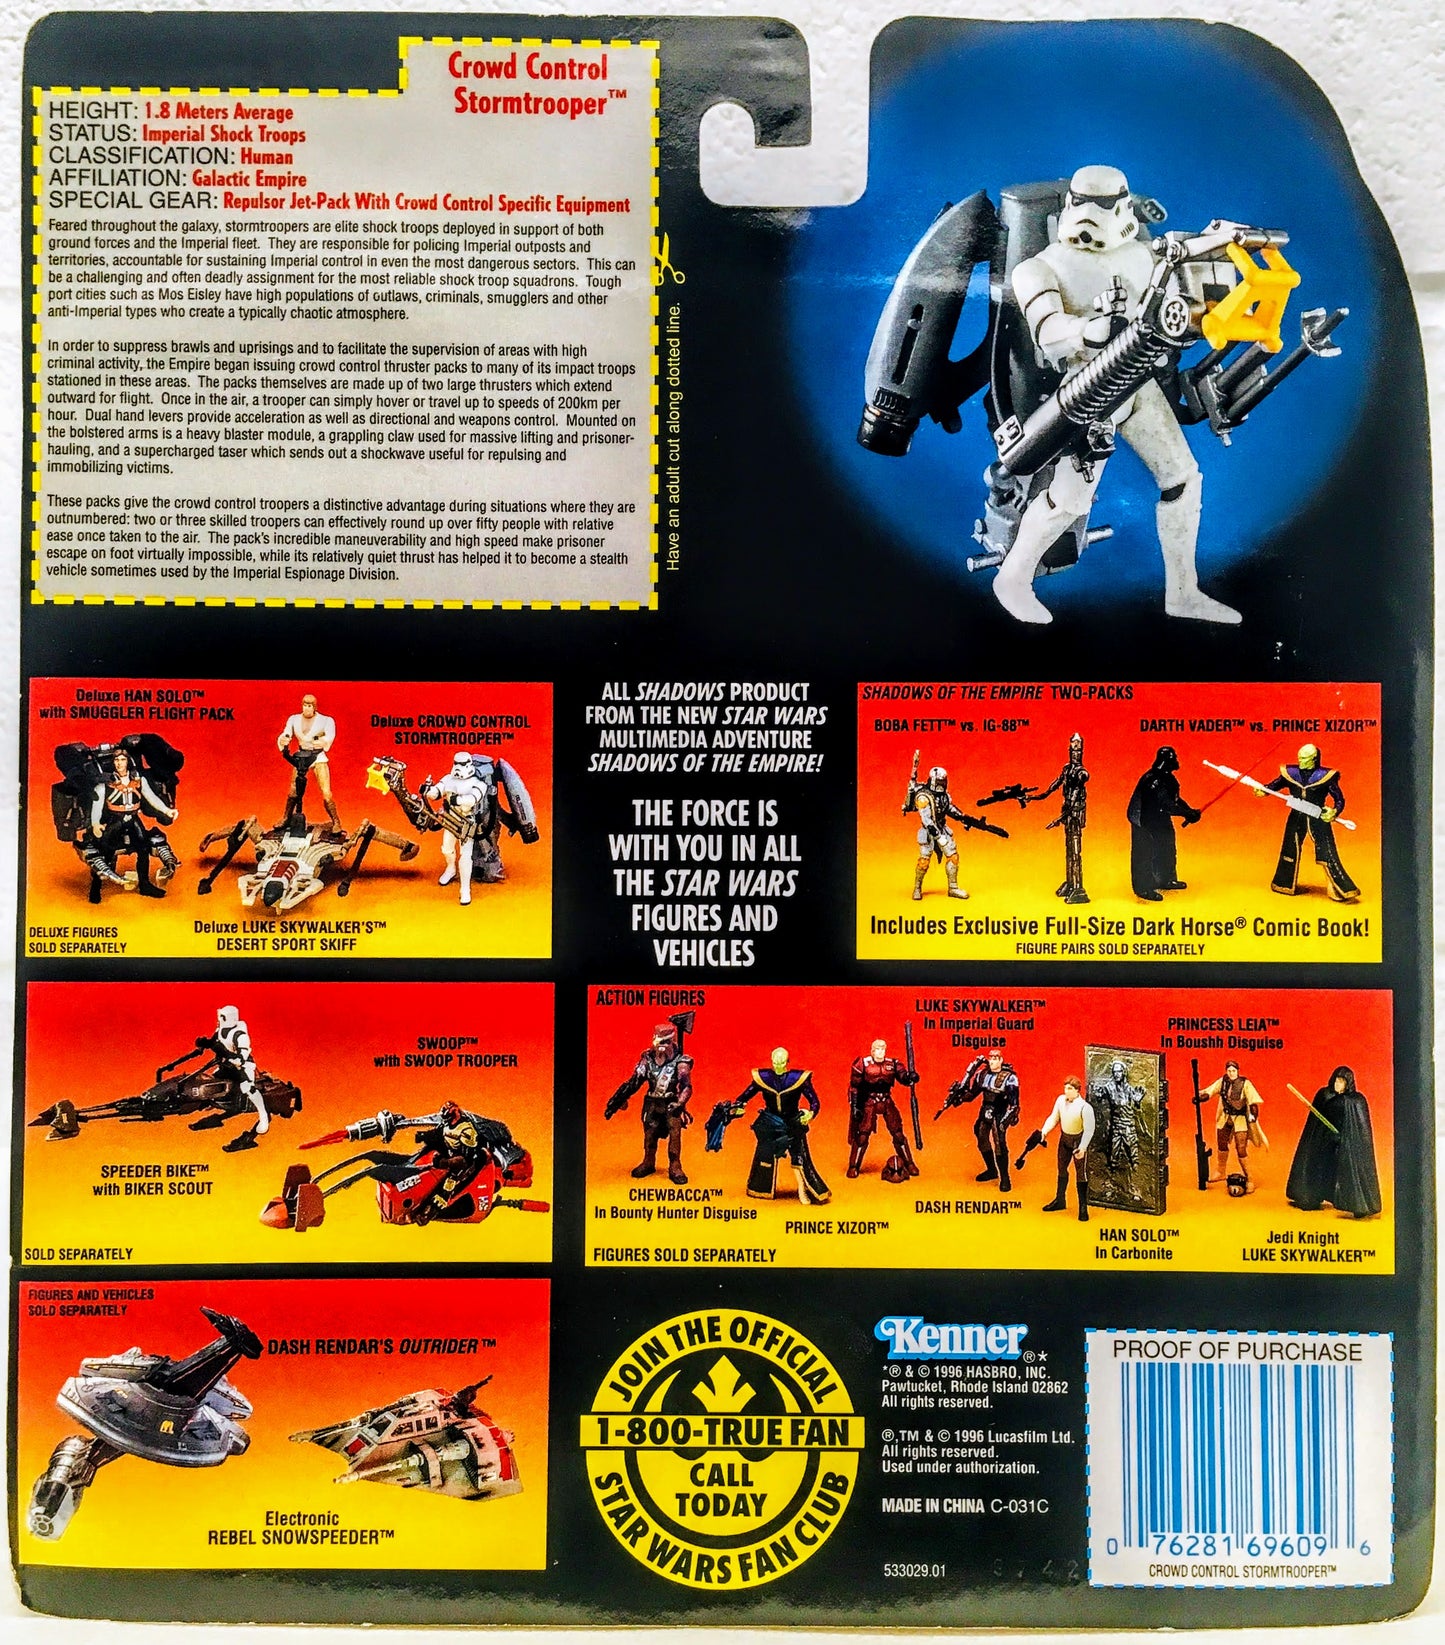 POTF Deluxe: Crowd Control Stormtrooper